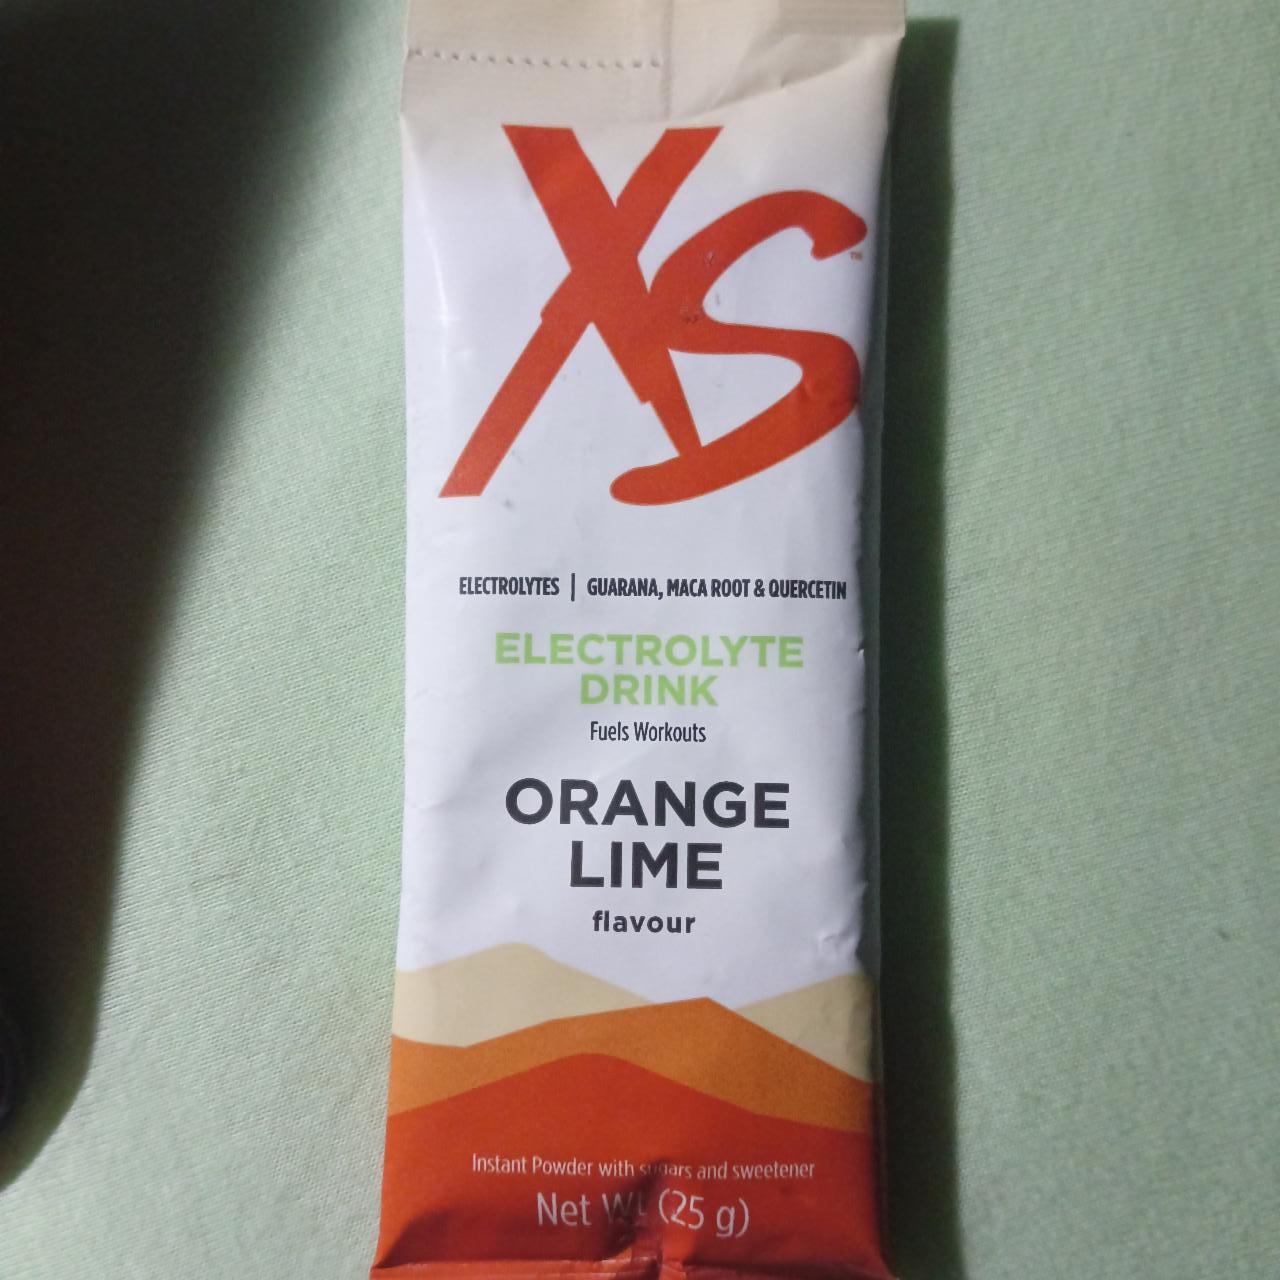 Fotografie - XS electrolyte drink Orange Lime flavour